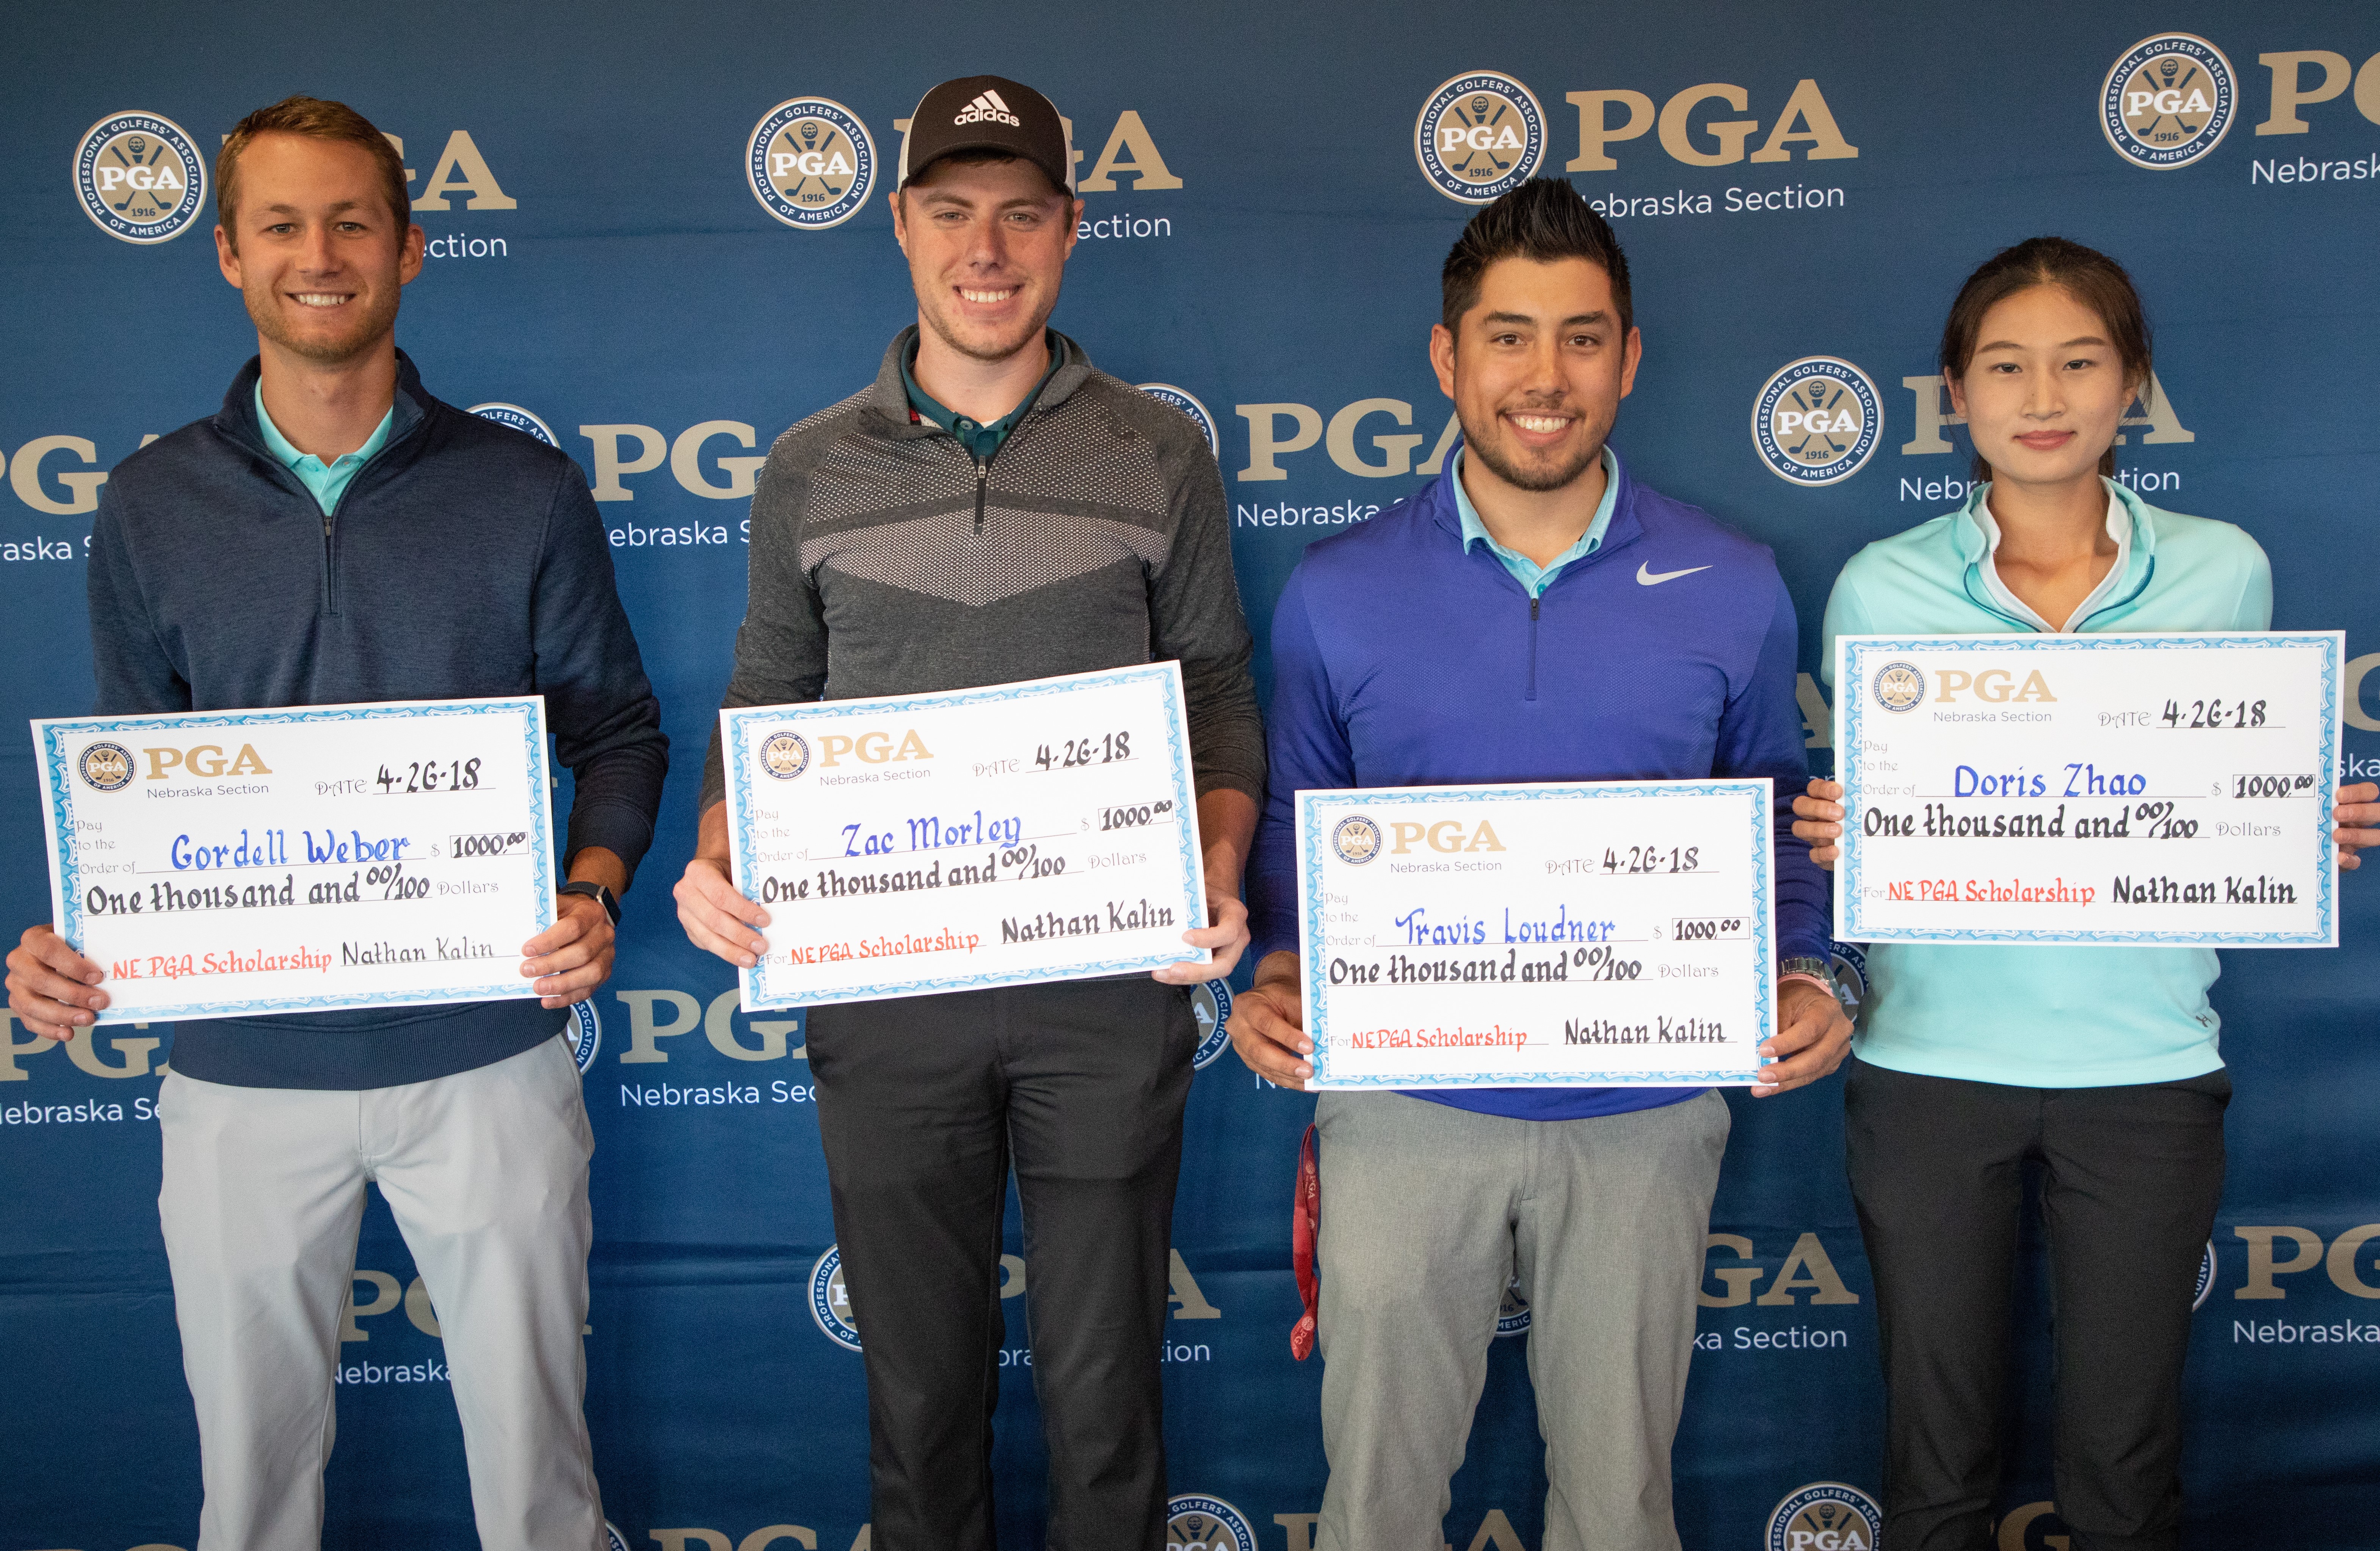 Nebraska Section PGA Scholarship Recipients include Cordell Weber, Zach Morley, TJ Loudner, and Doris Zhao